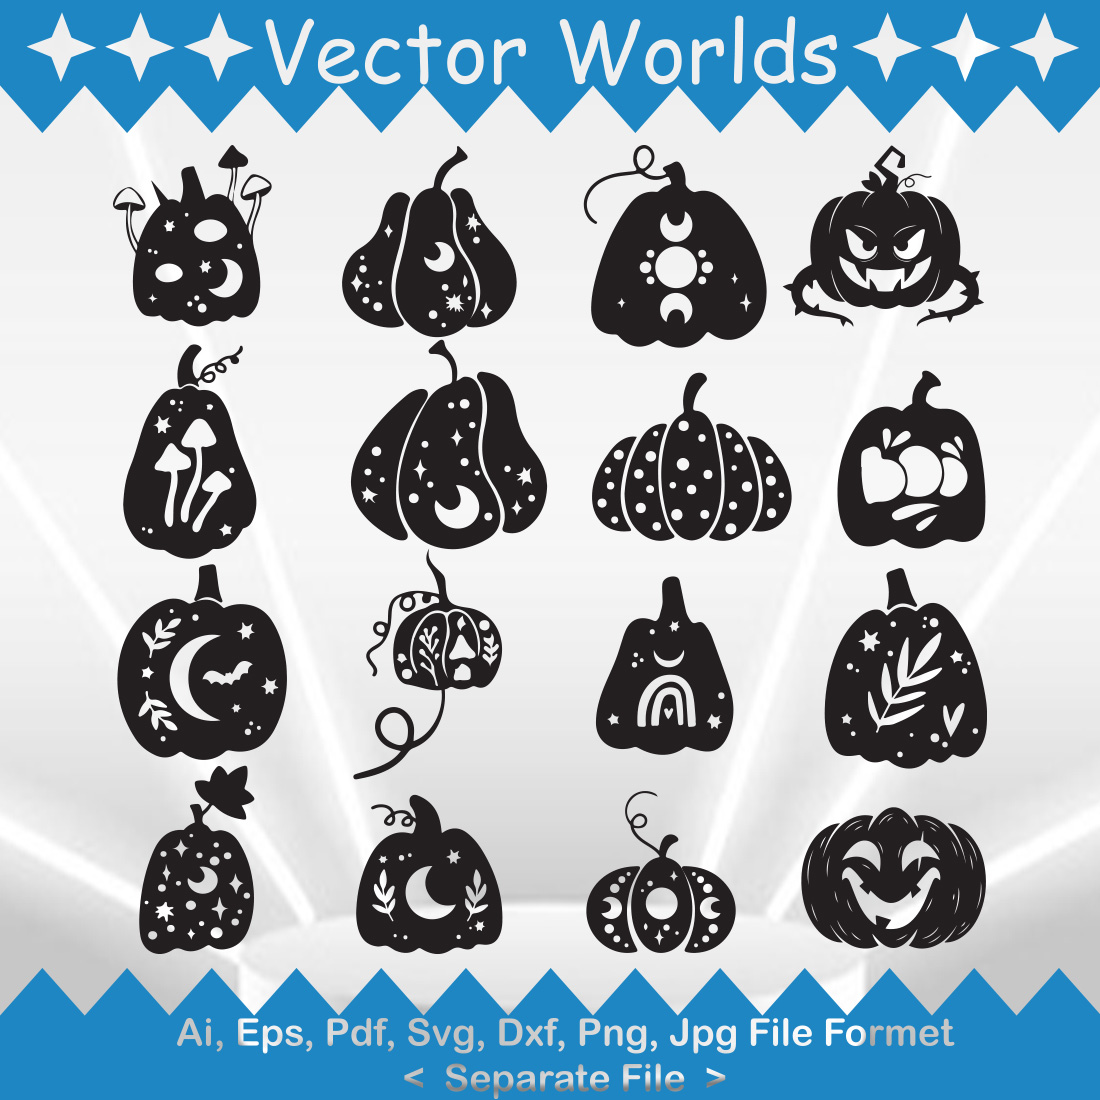 Celestial Pumpkin SVG Vector Design cover image.